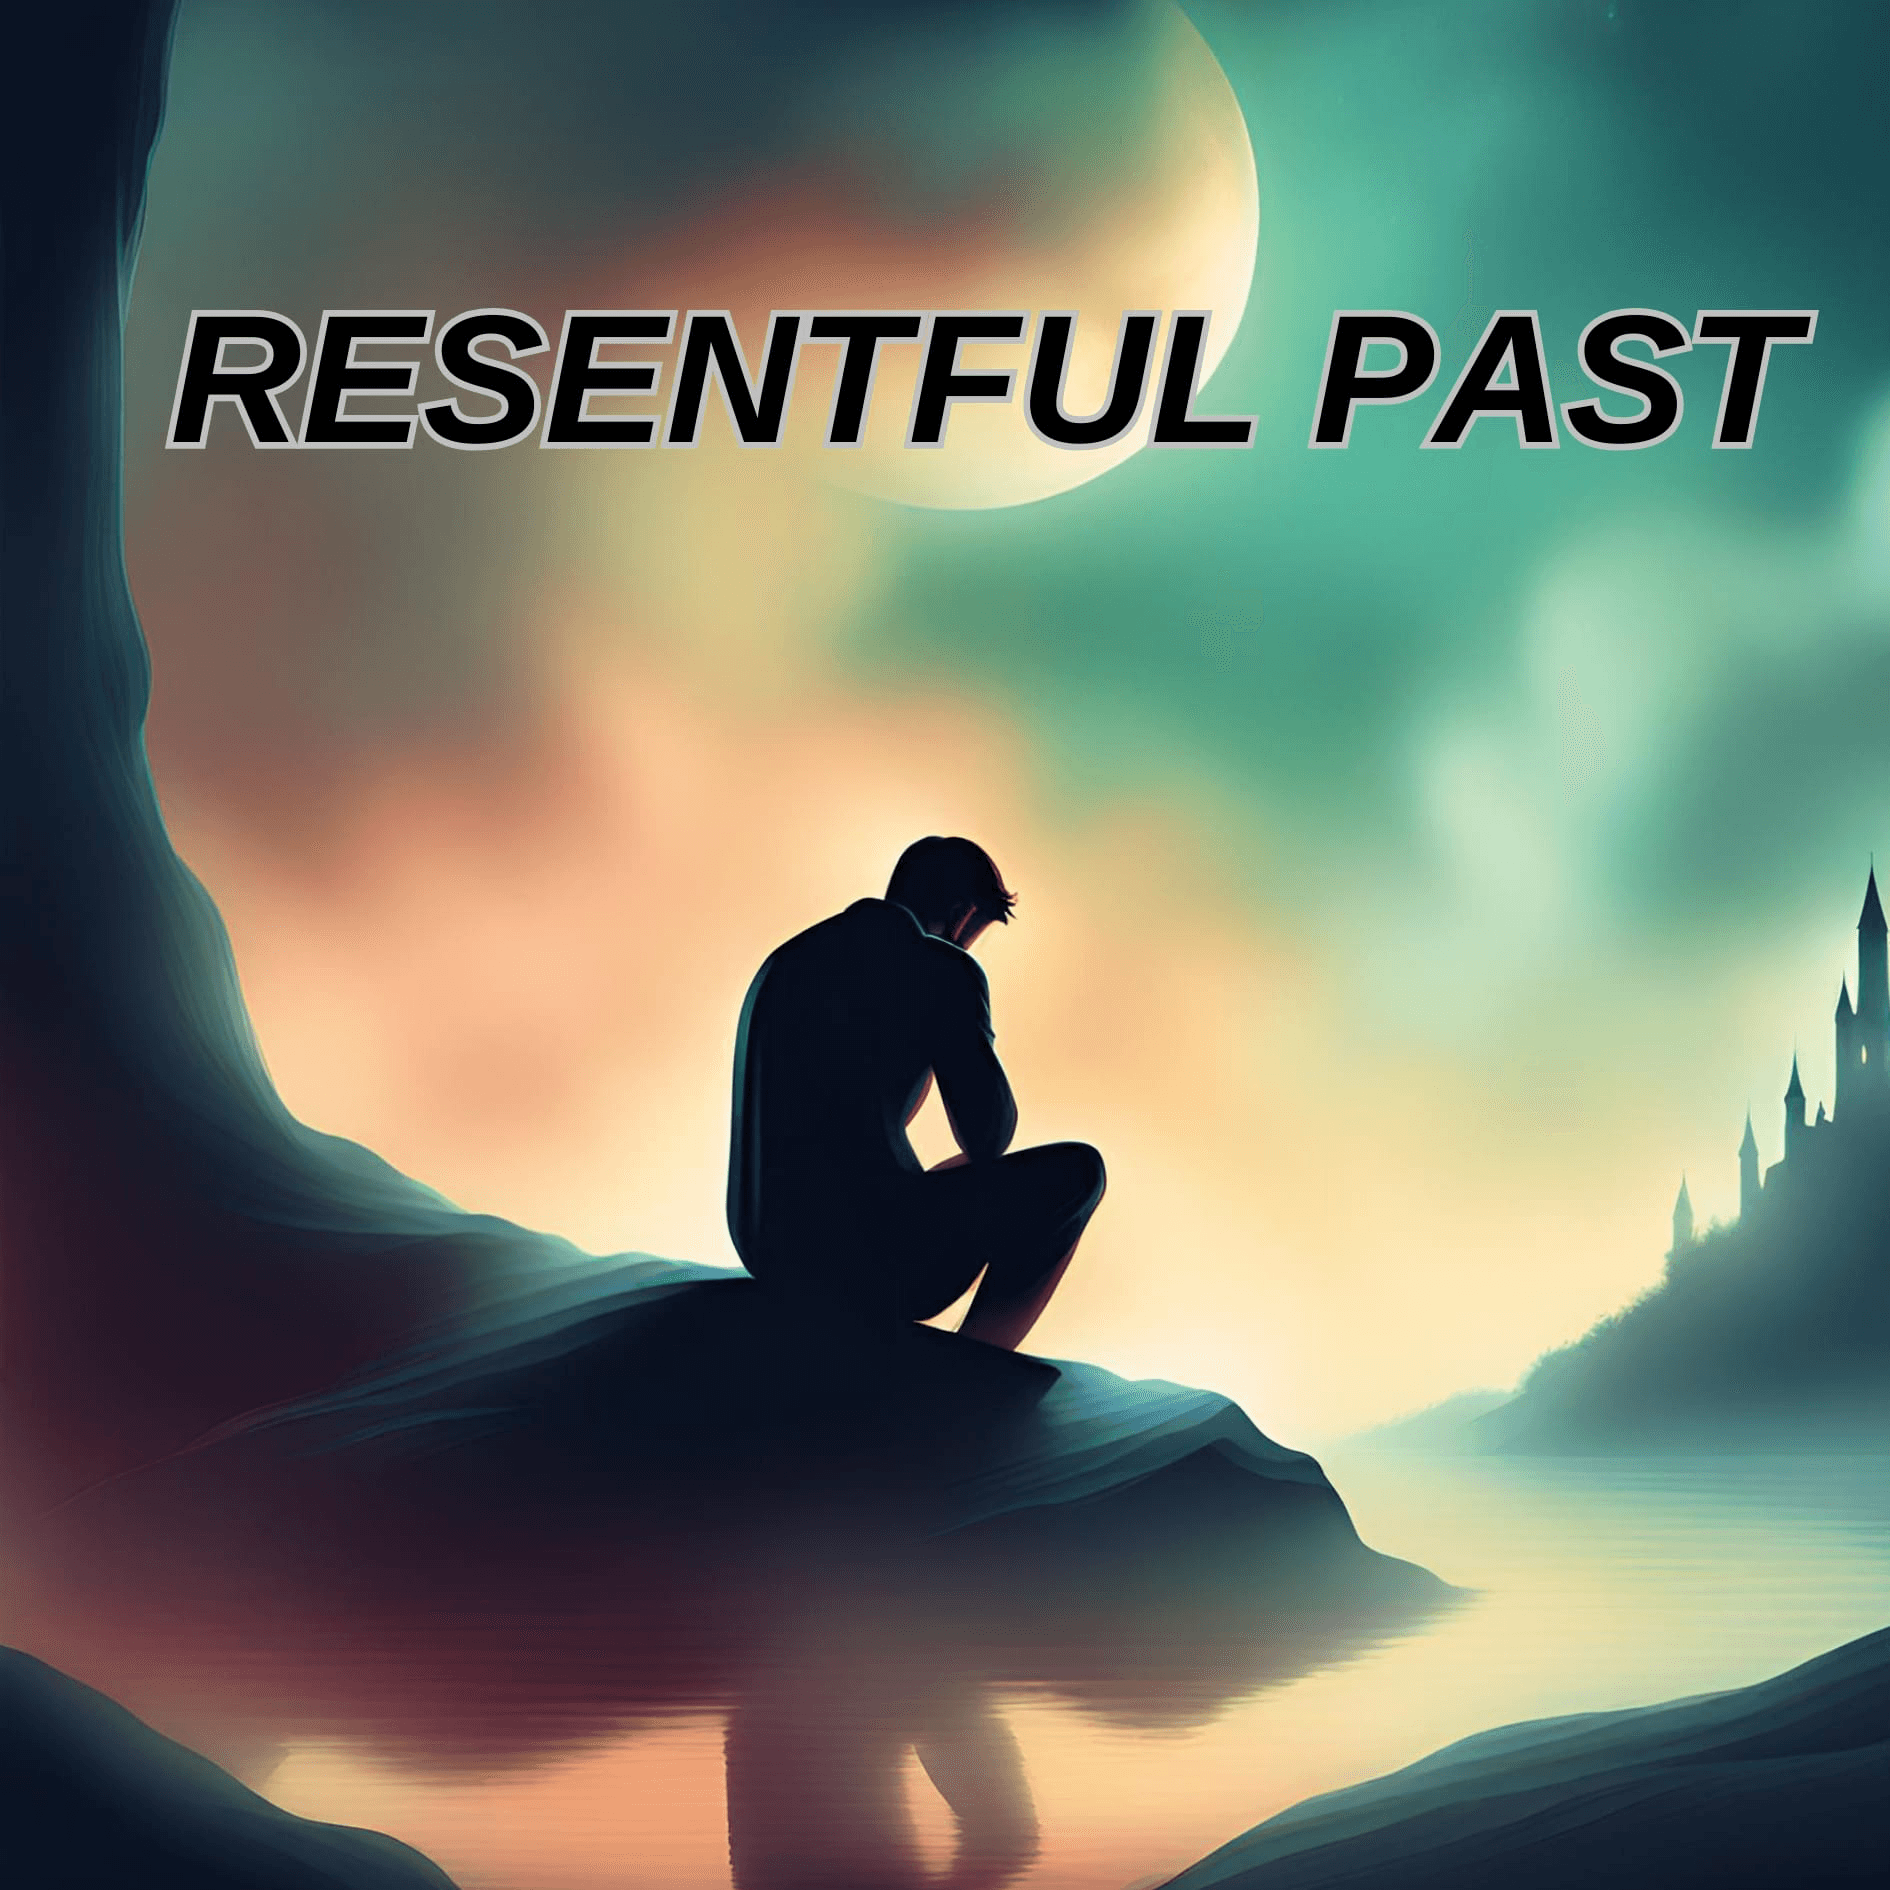 Resentful Past